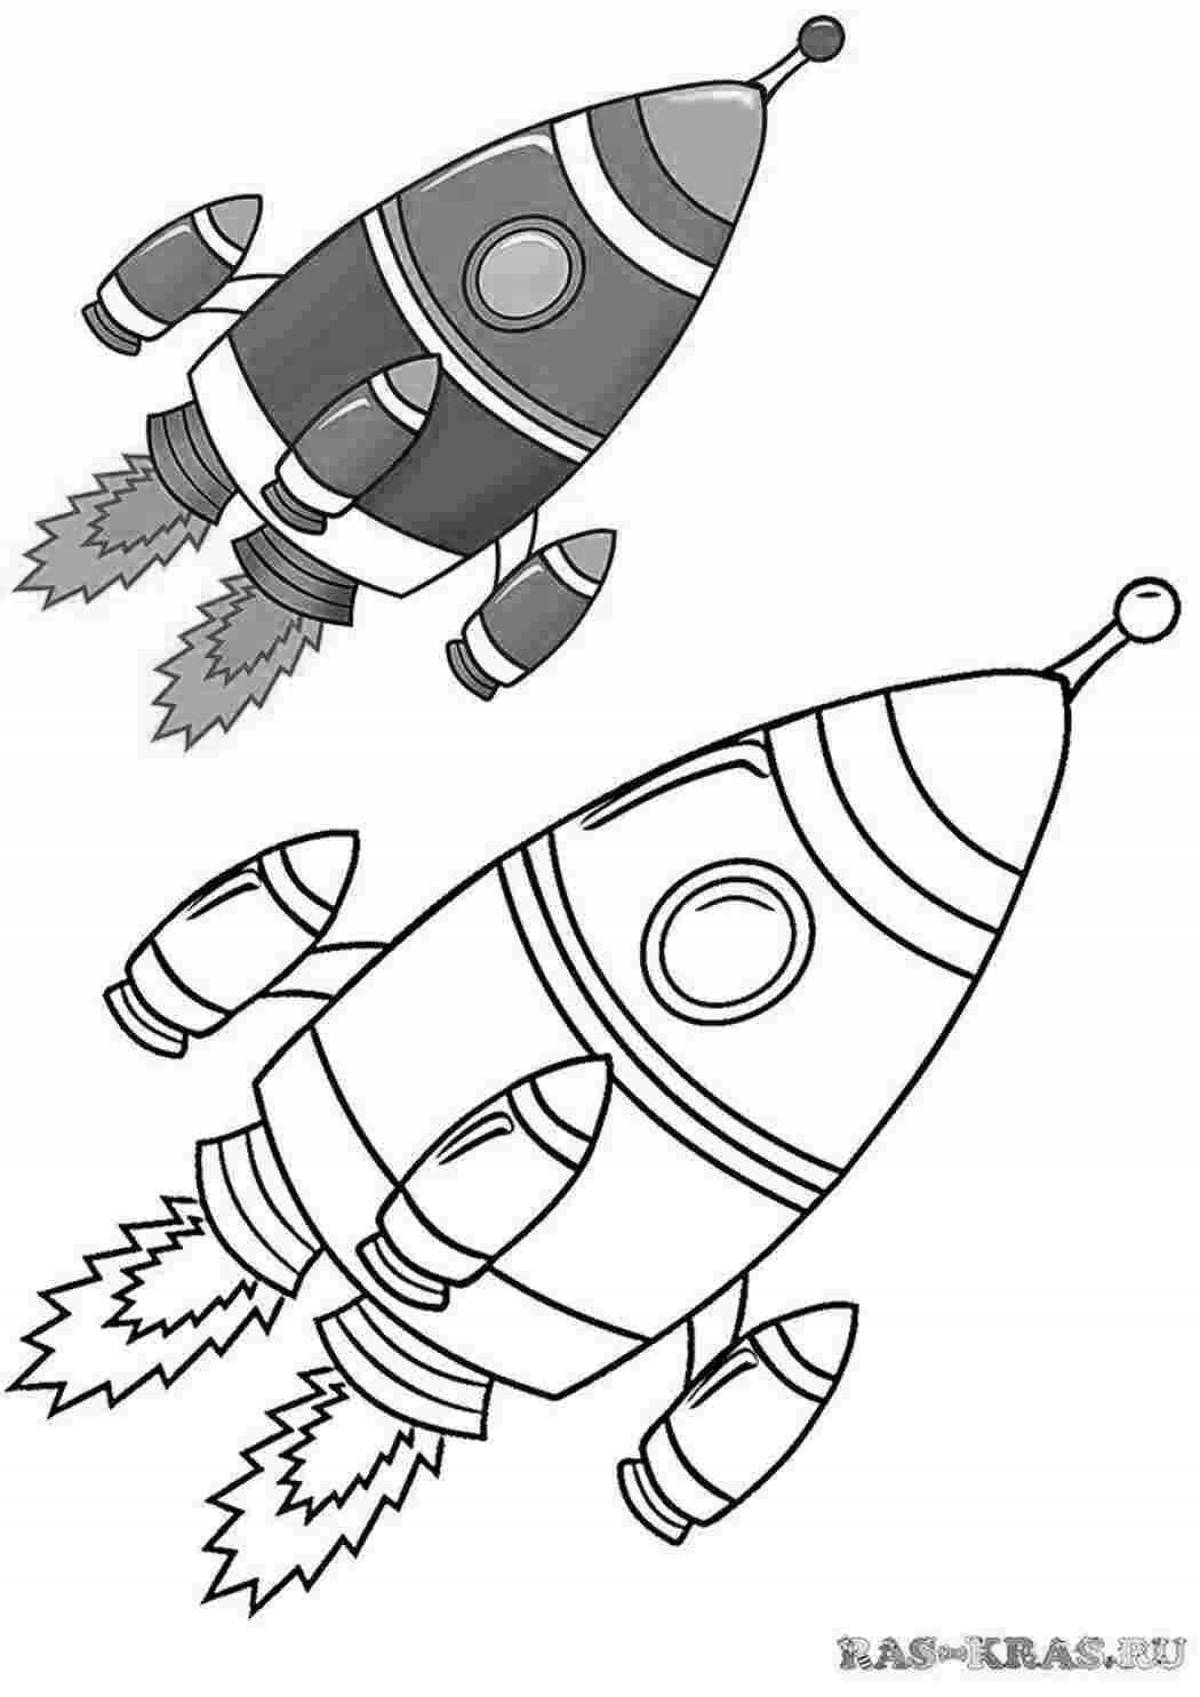 Fantastic rocket coloring book for boys